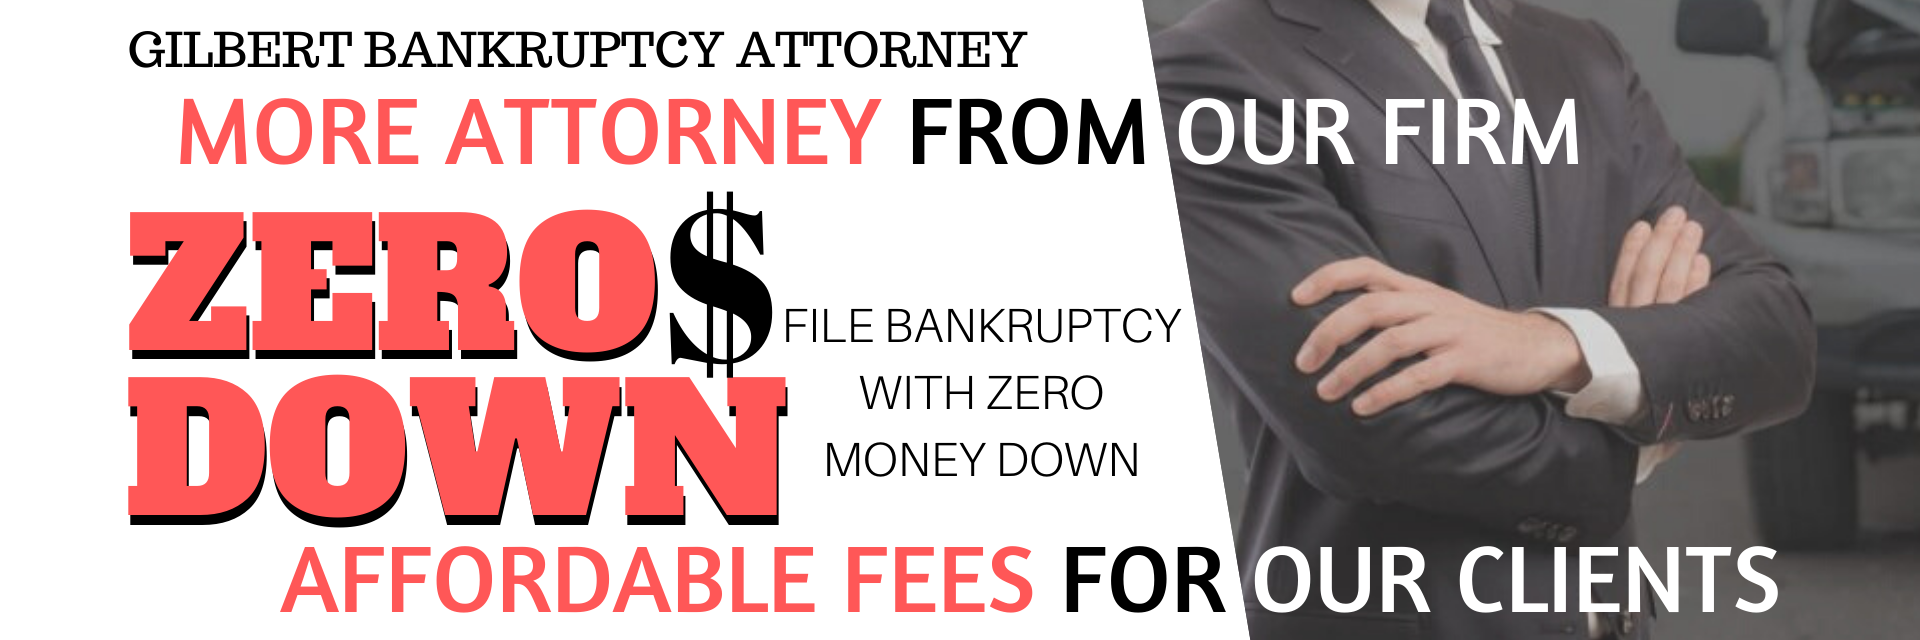 Zero money down bankruptcy offer